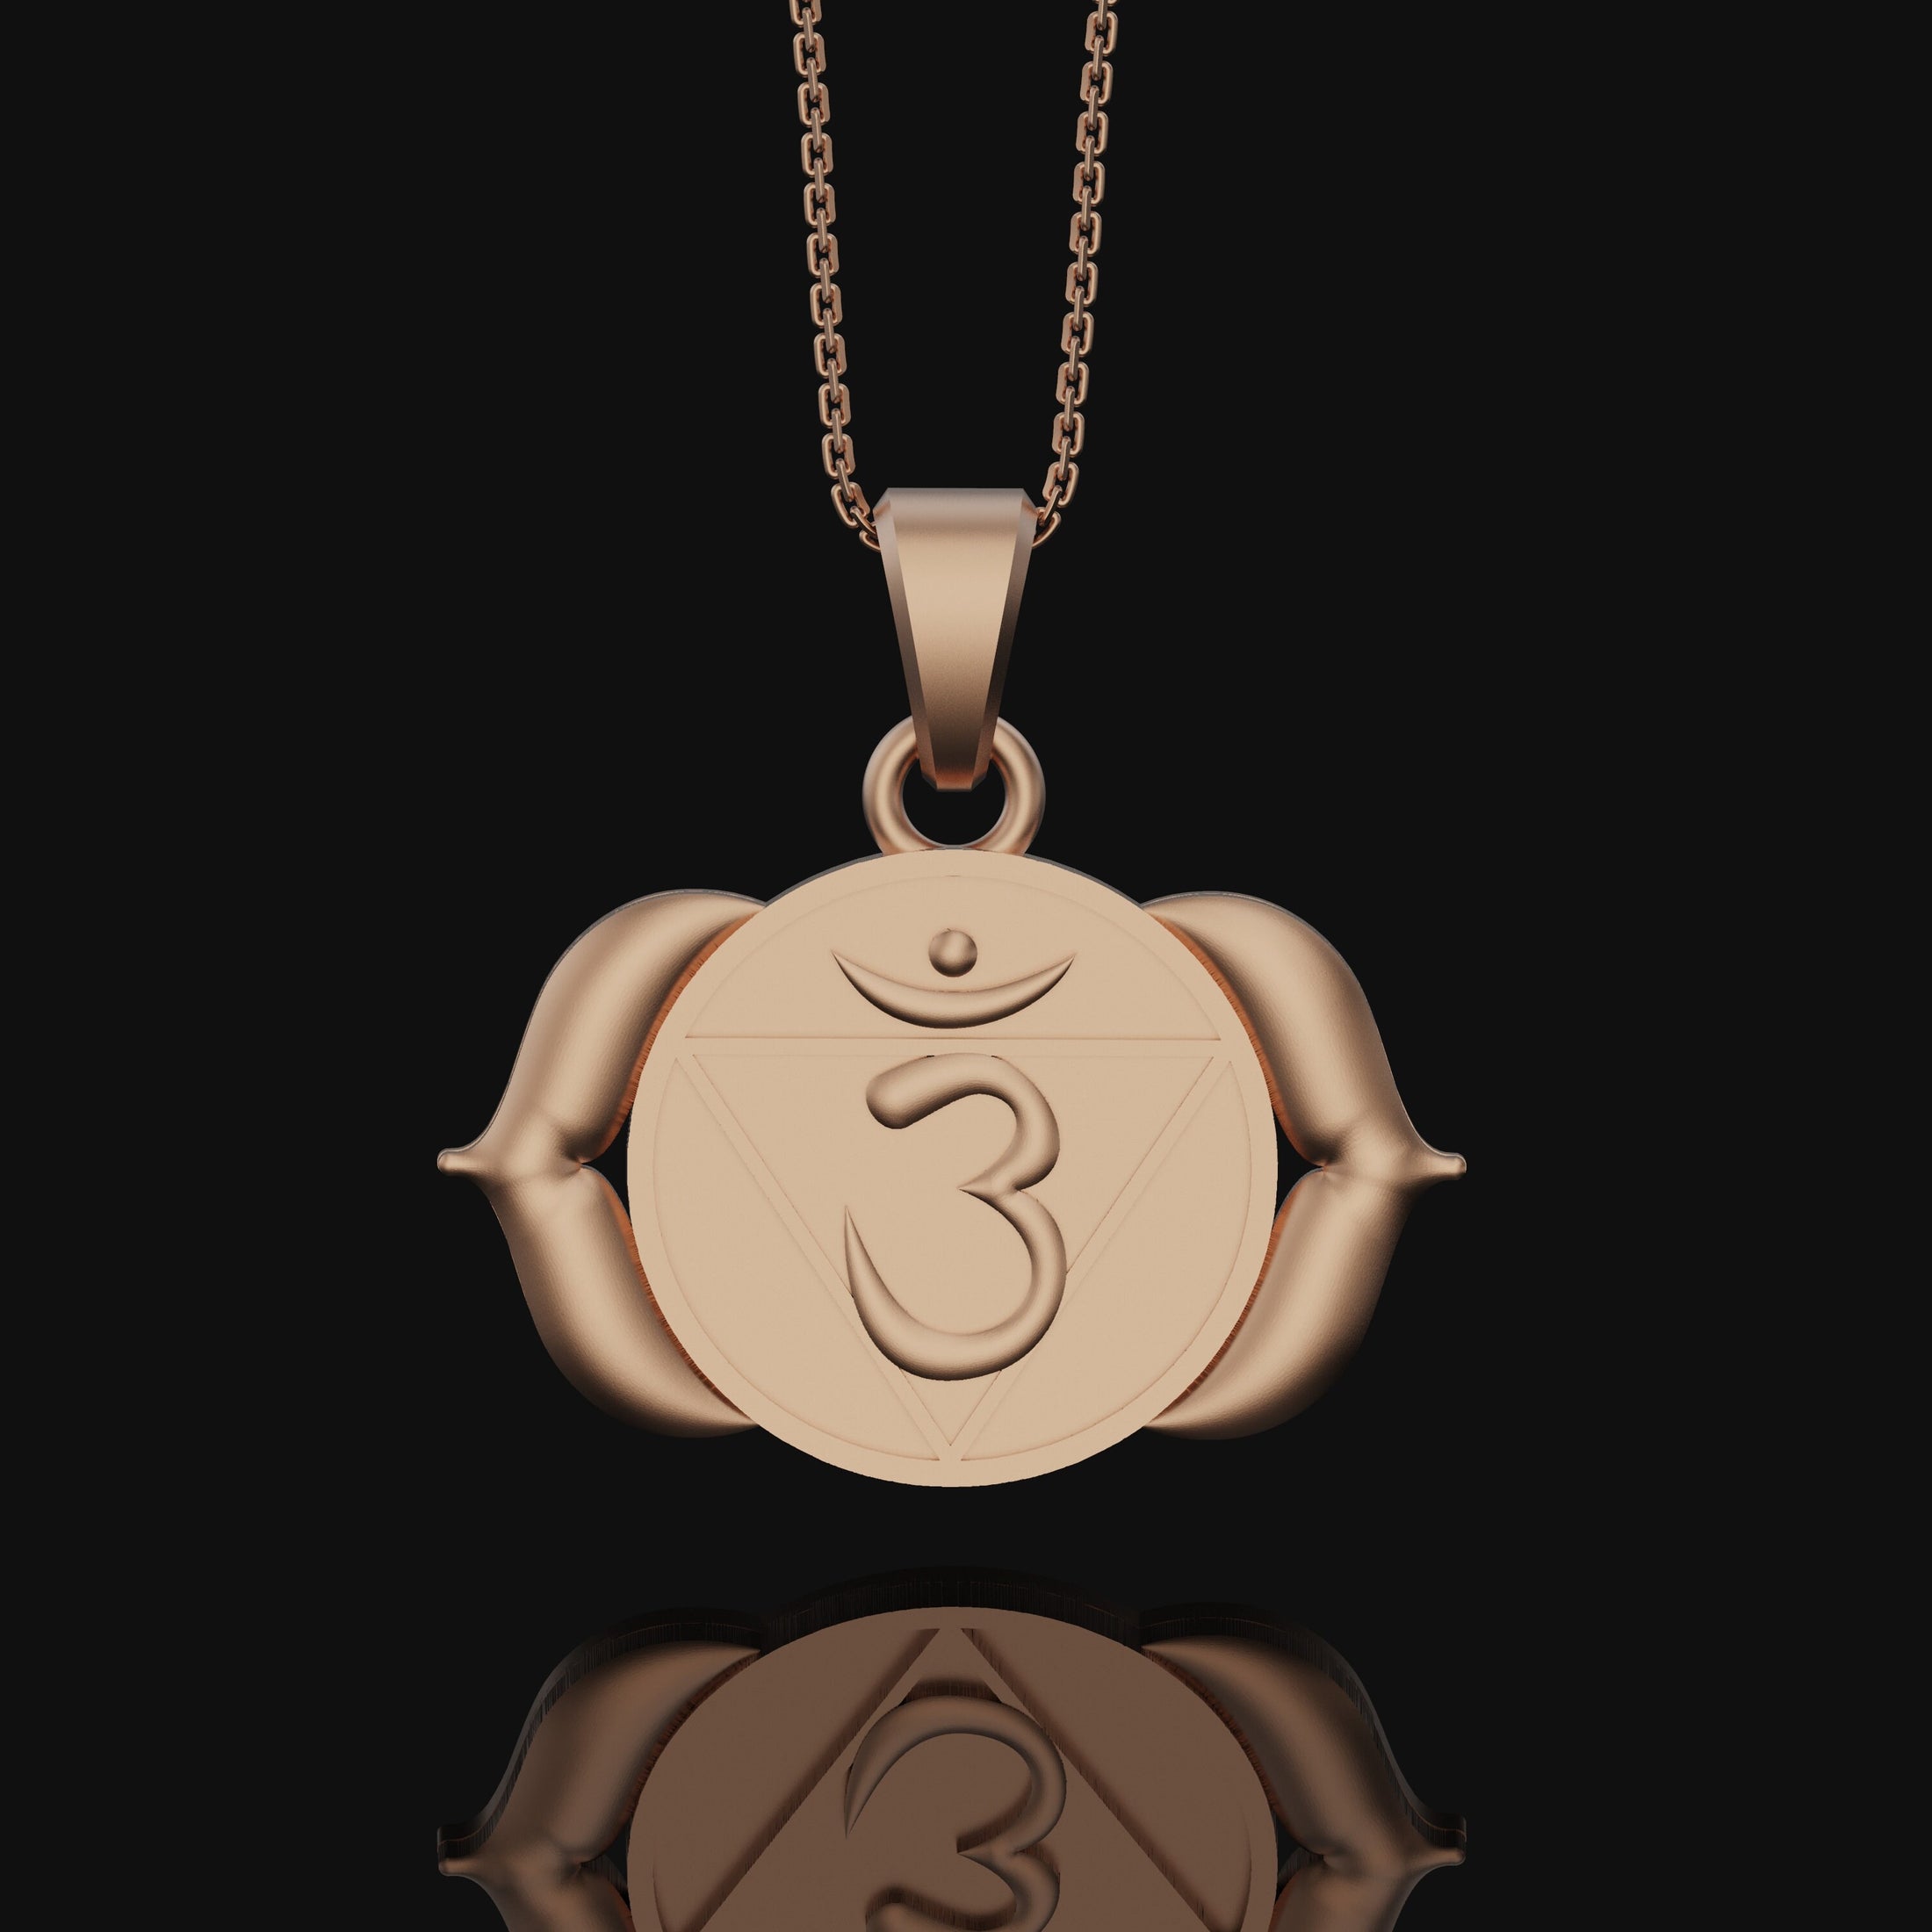 Third Eye Chakra Necklace, Chakras, Meditation, Reiki, Spiritual Gift, Metaphysical, Gift For Her, Handmade Jewelry Rose Gold Finish